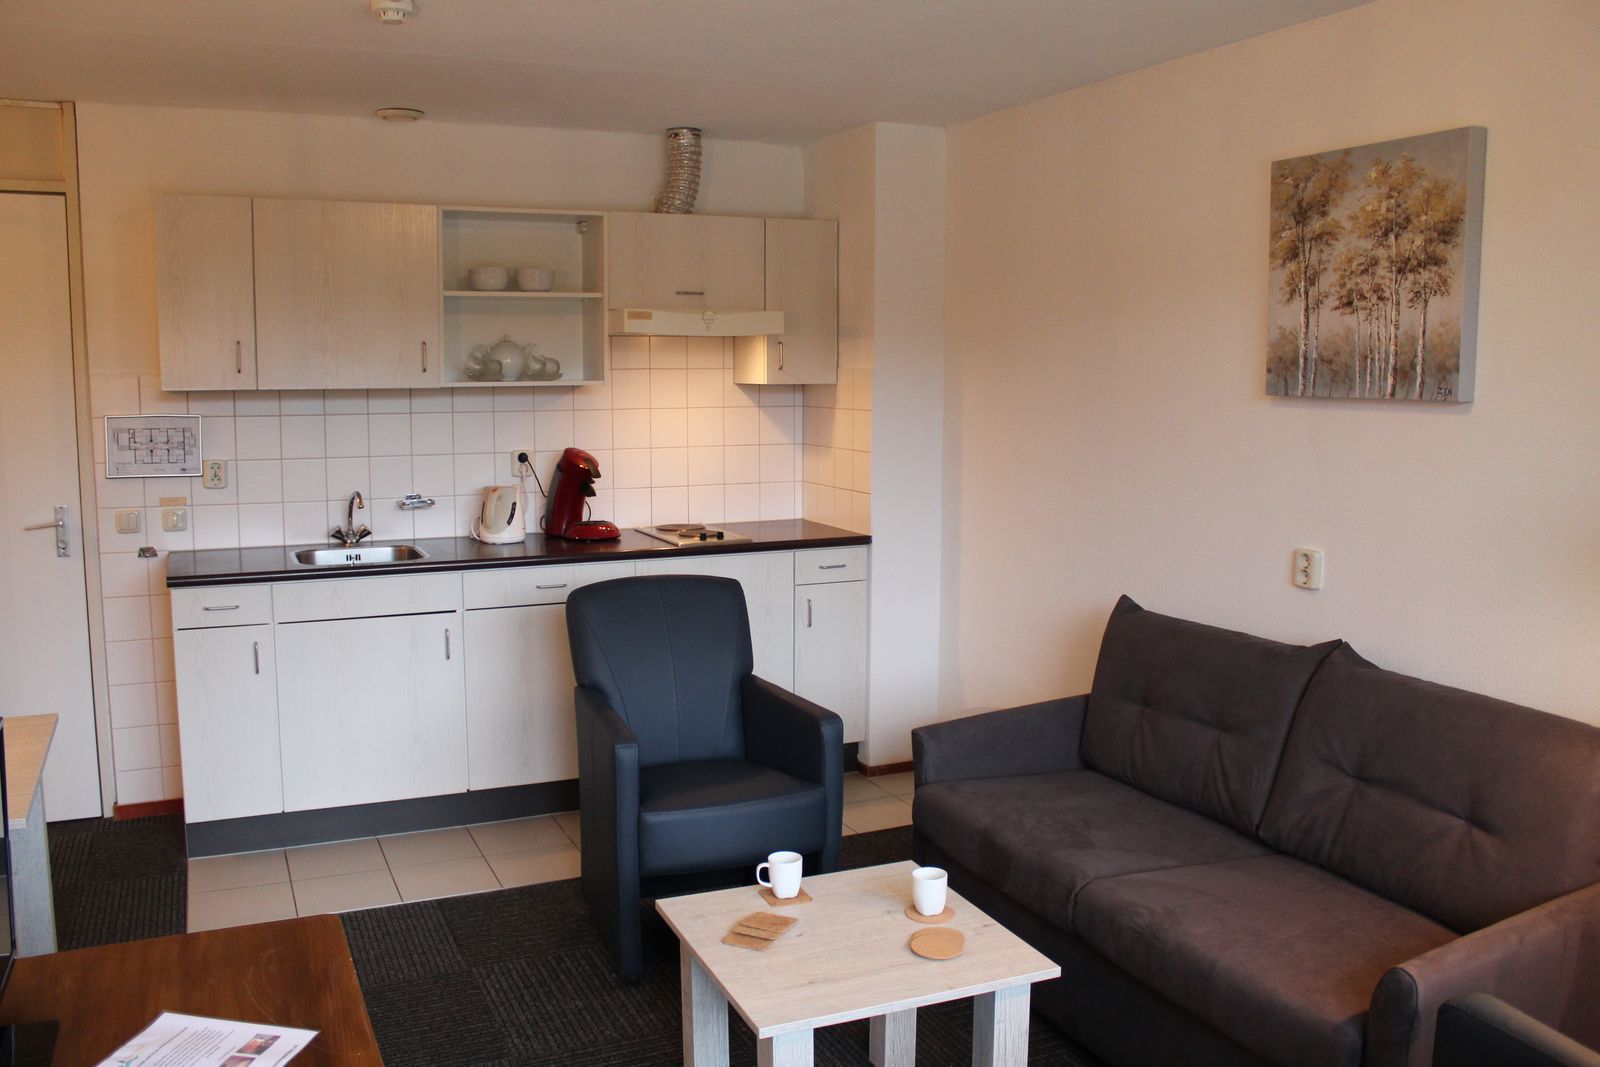 4-person apartment in Doorn - Utrecht, Nederland foto 6133813